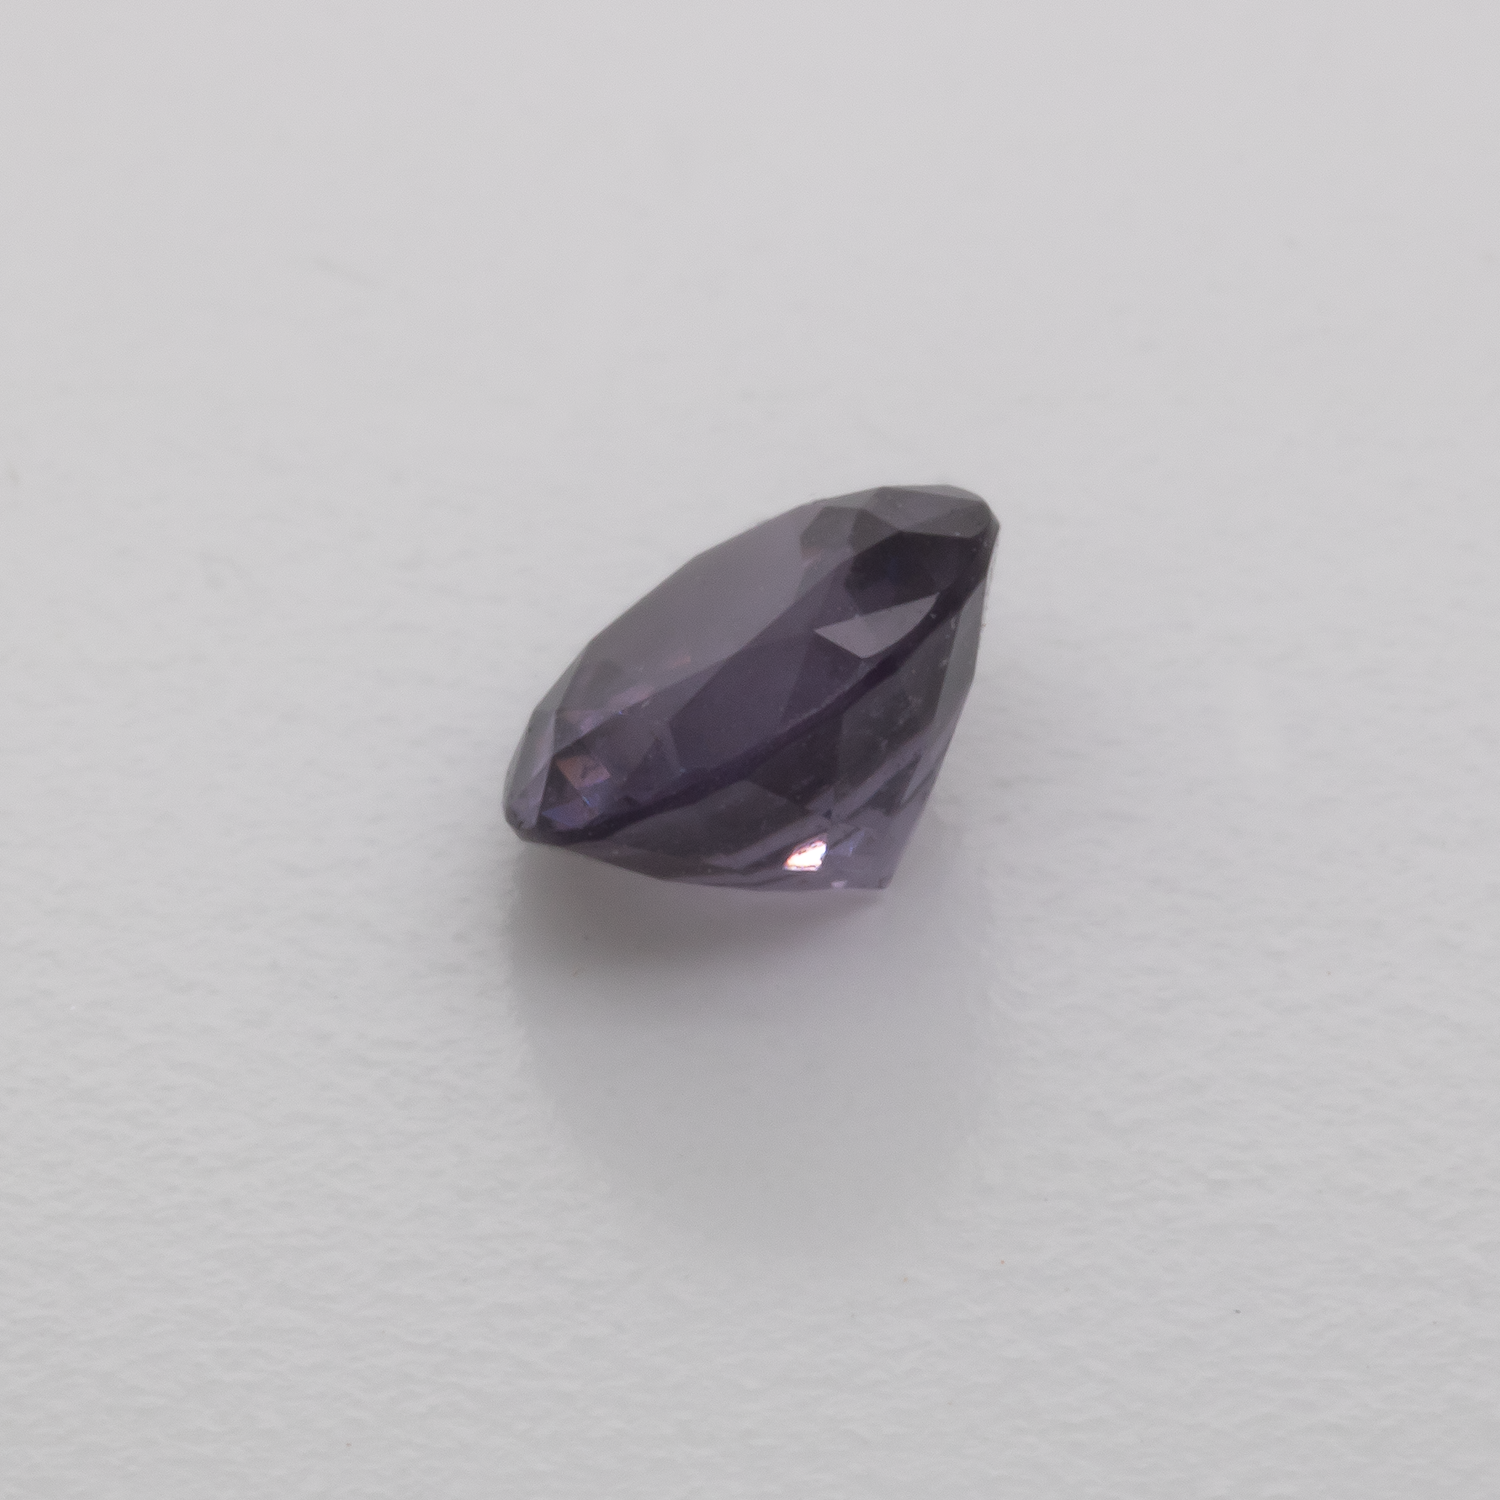 Spinel - purple, round, 5.1x5.1 mm, 0.55 cts, No. SP90015